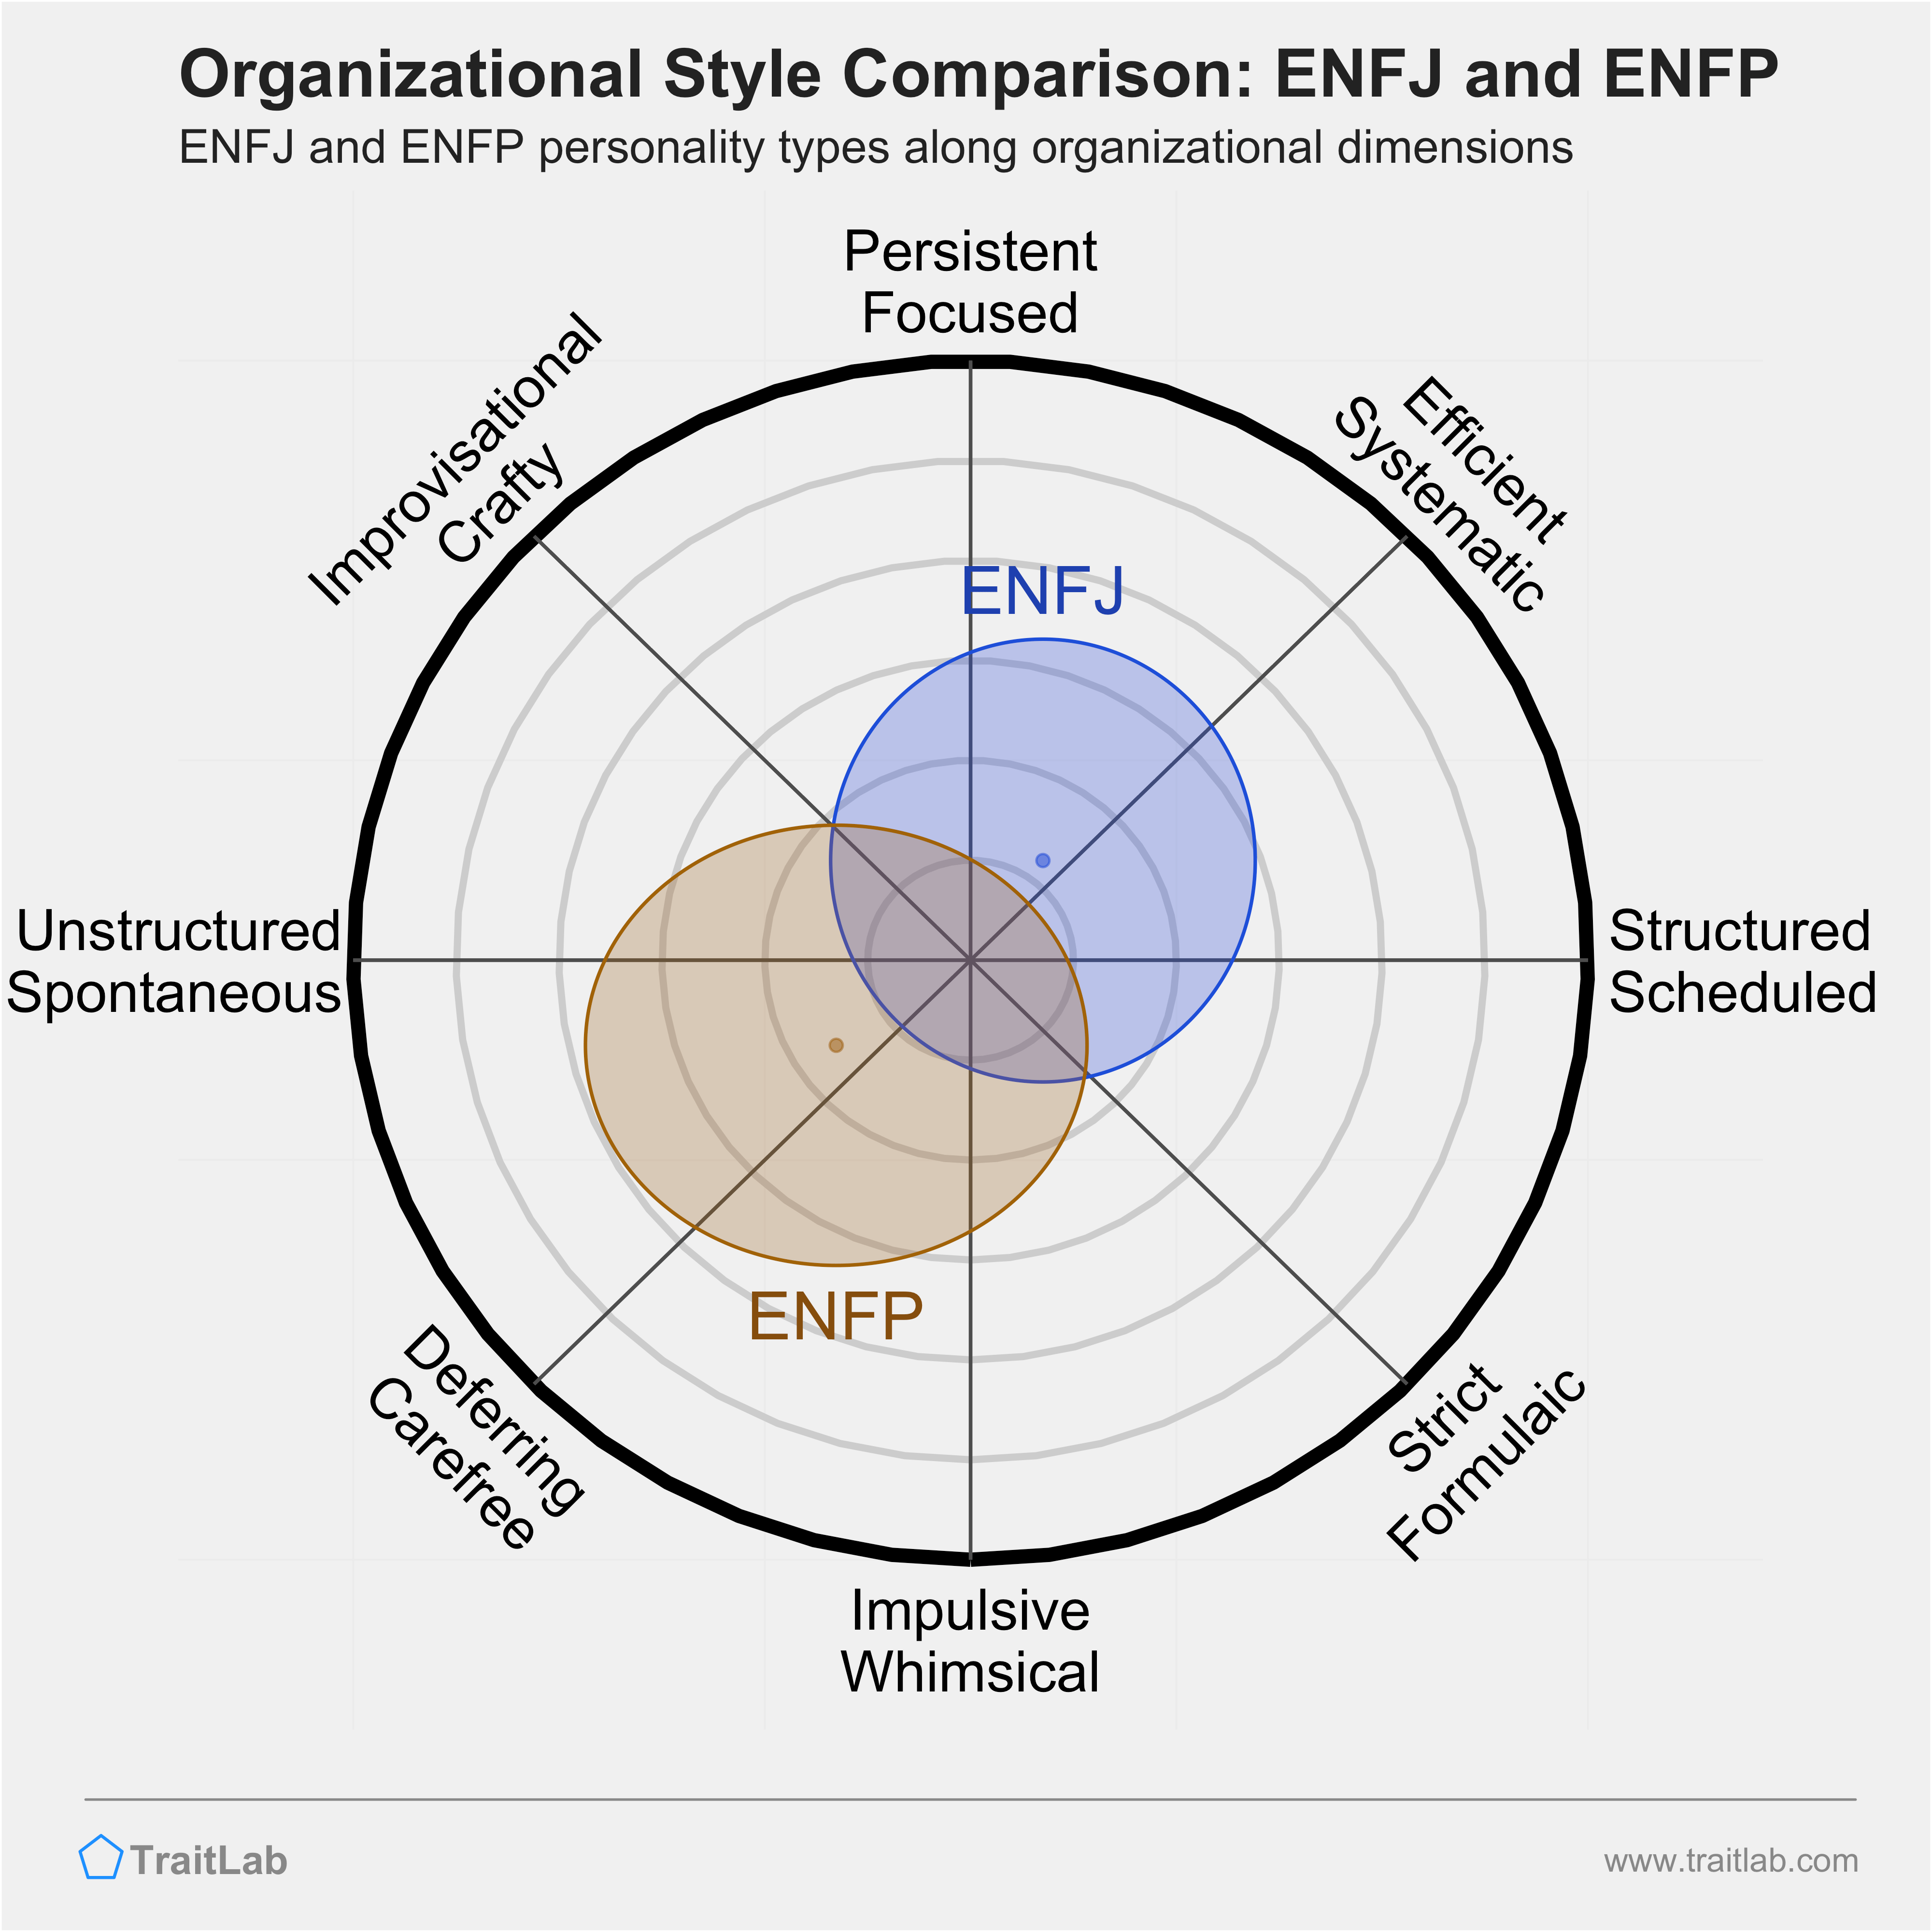 ENFJ and ENFP comparison across organizational dimensions